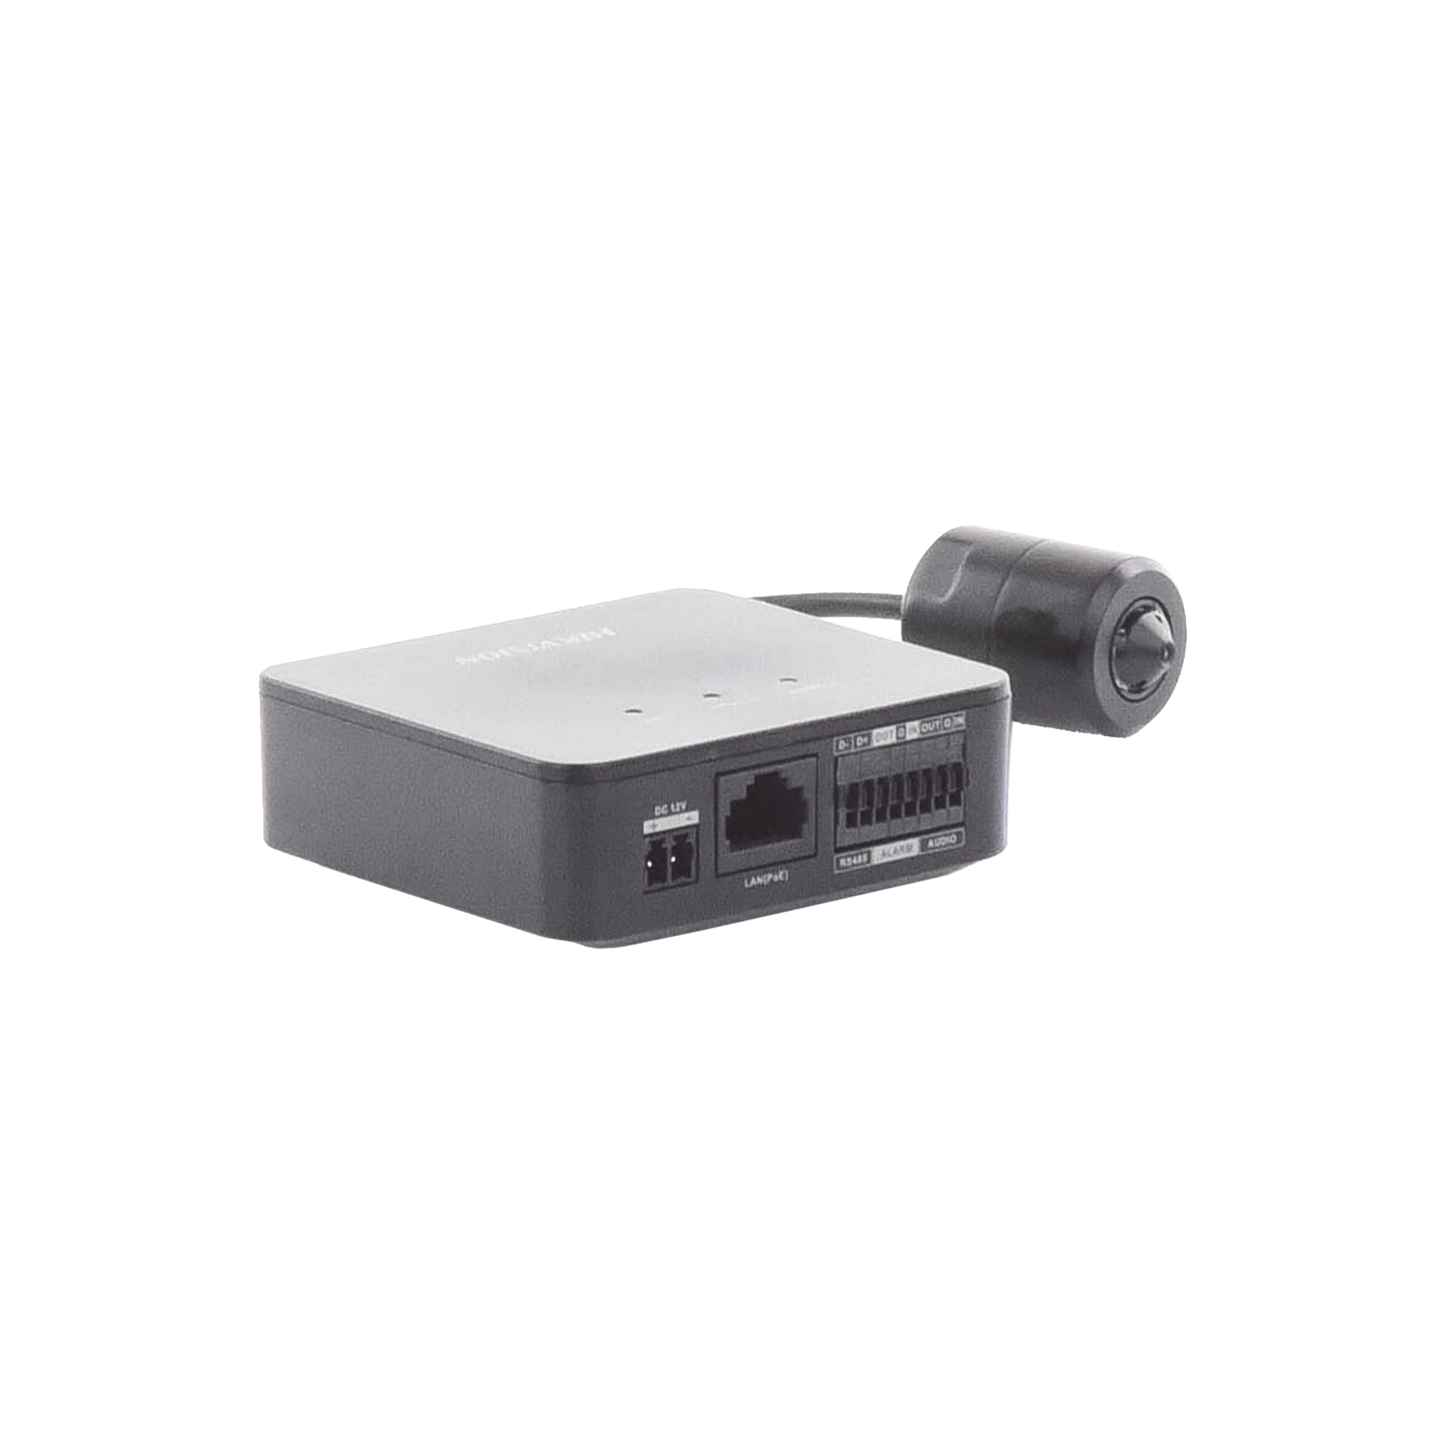 Pinhole IP 2 Megapixel / Lente 3.7 mm / 2 Mts Cable / PoE / Ideal para Cajeros Automáticos (ATM) / WDR / Micro SD / Cámara Tipo Cilindro